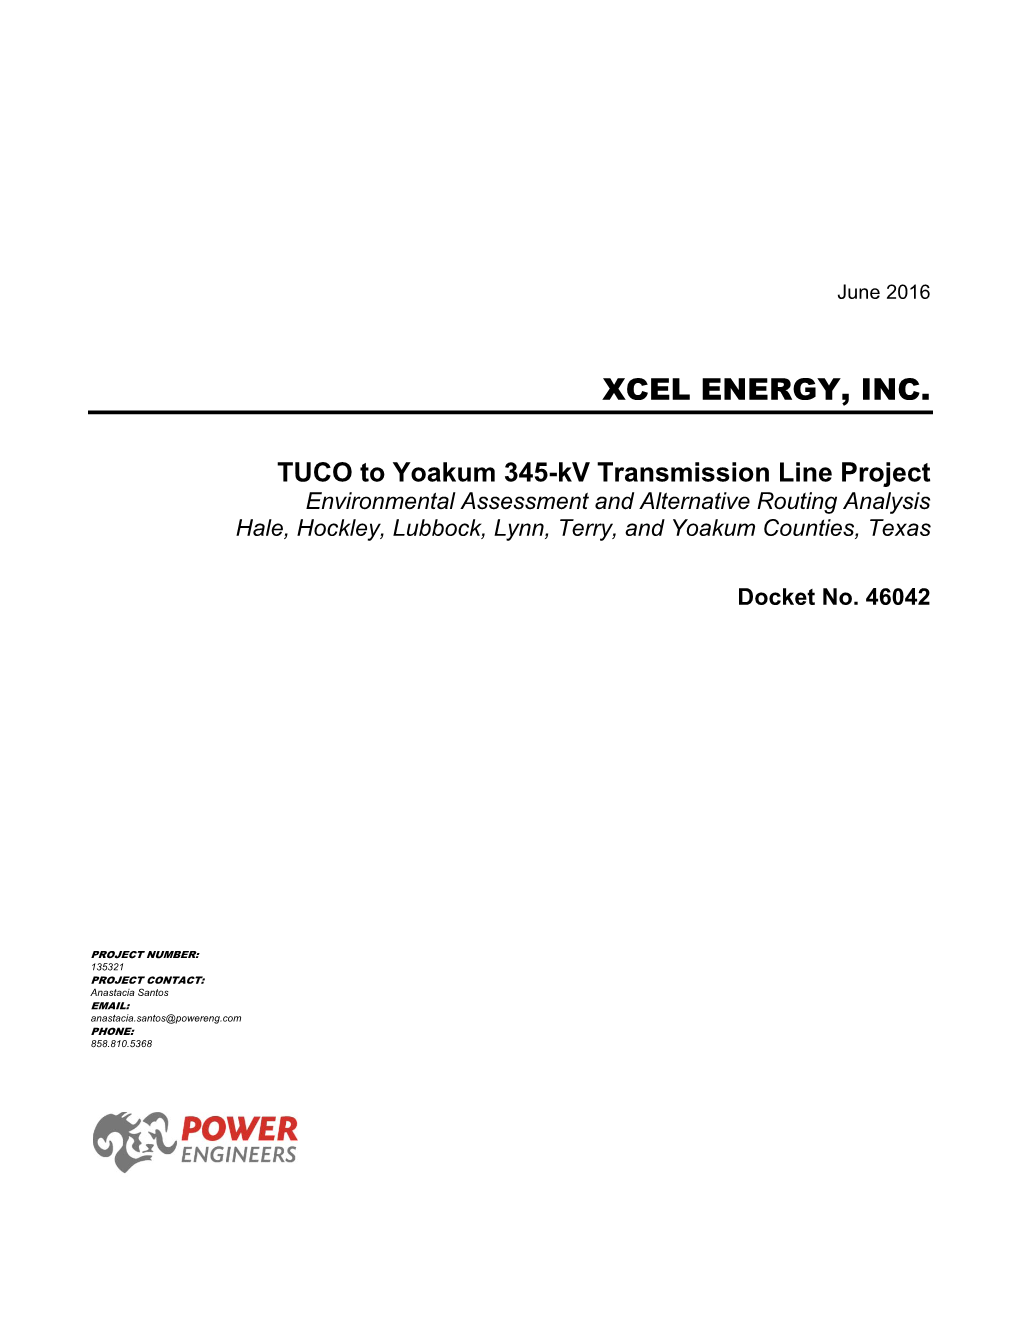 TUCO to Yoakum 345-Kv Transmission Line Project